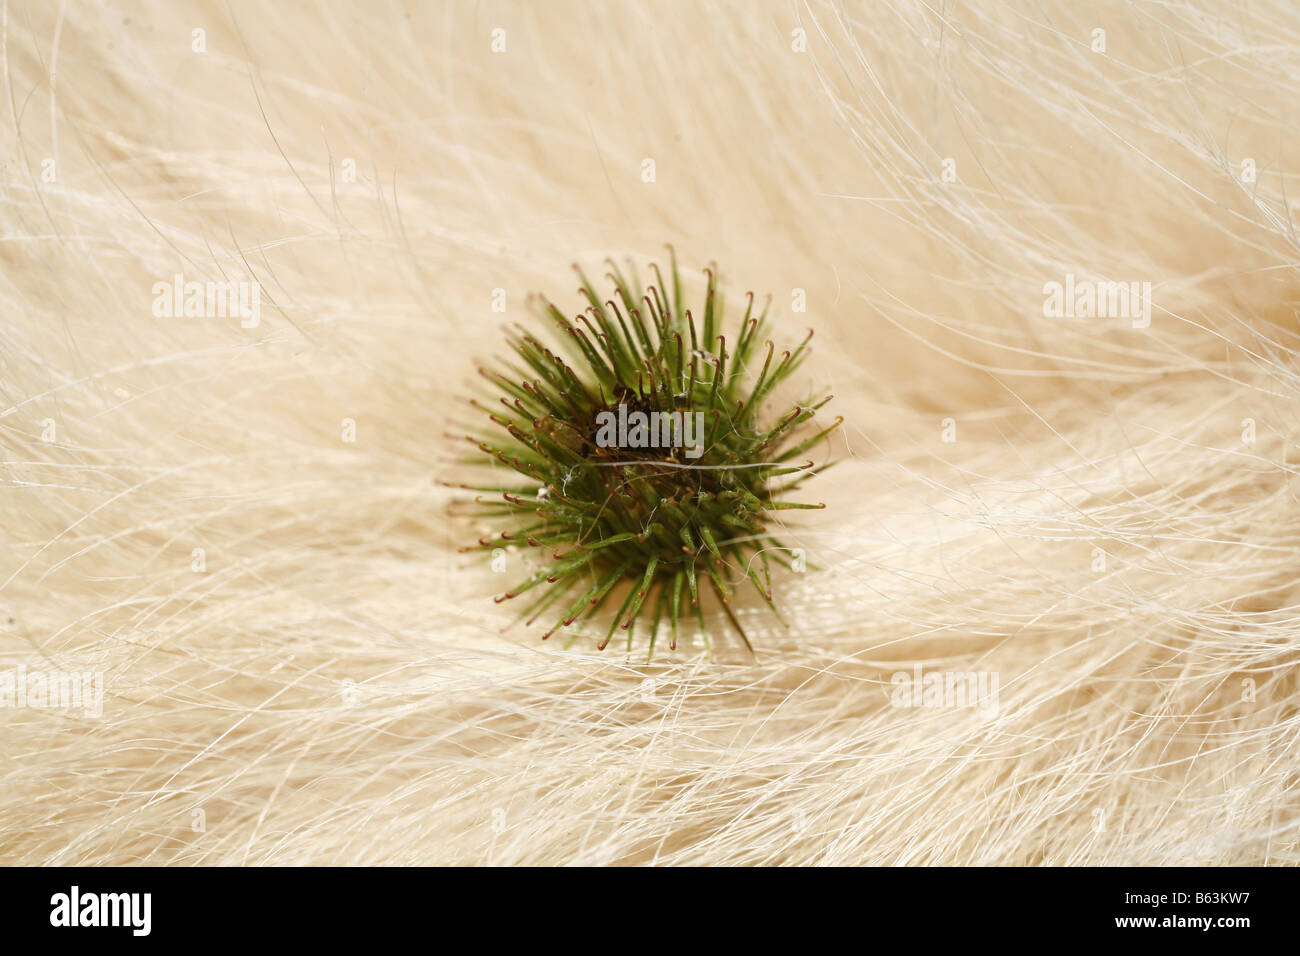 Burdock (Arctium sp). Seed head in the fur of a Golden Retriever Stock Photo